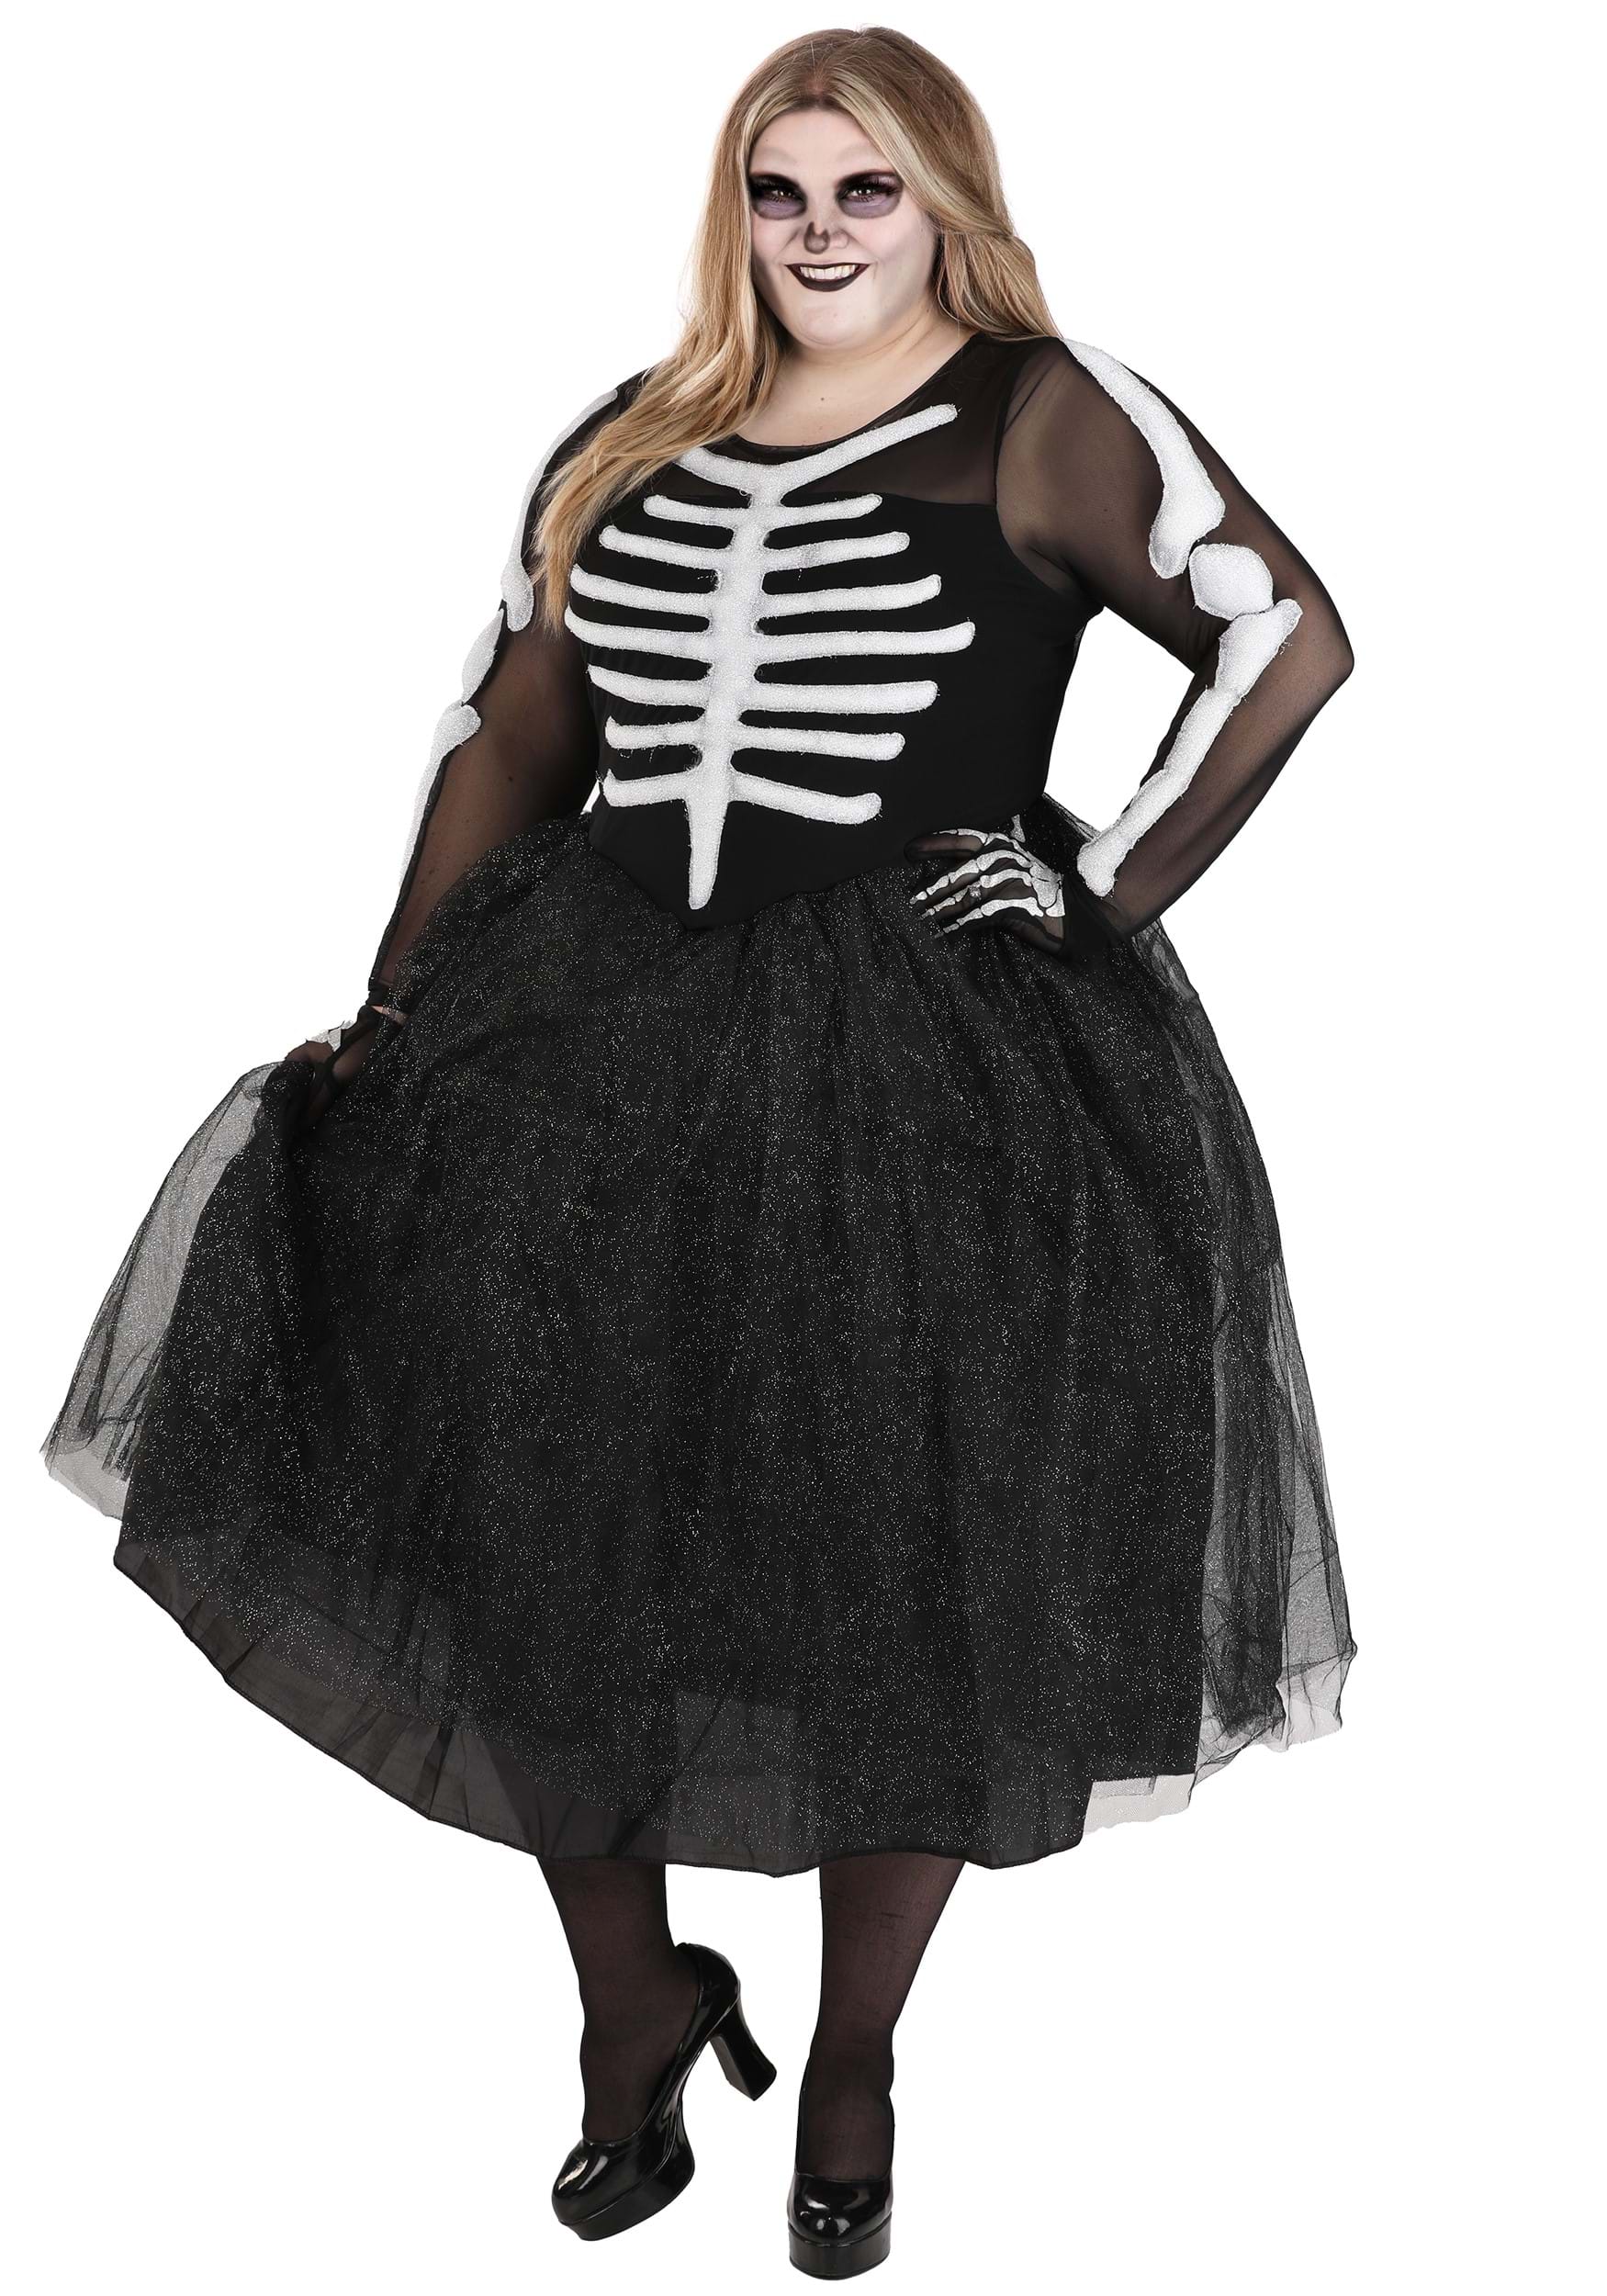 Skeleton Beauty Plus Size Costume for Women